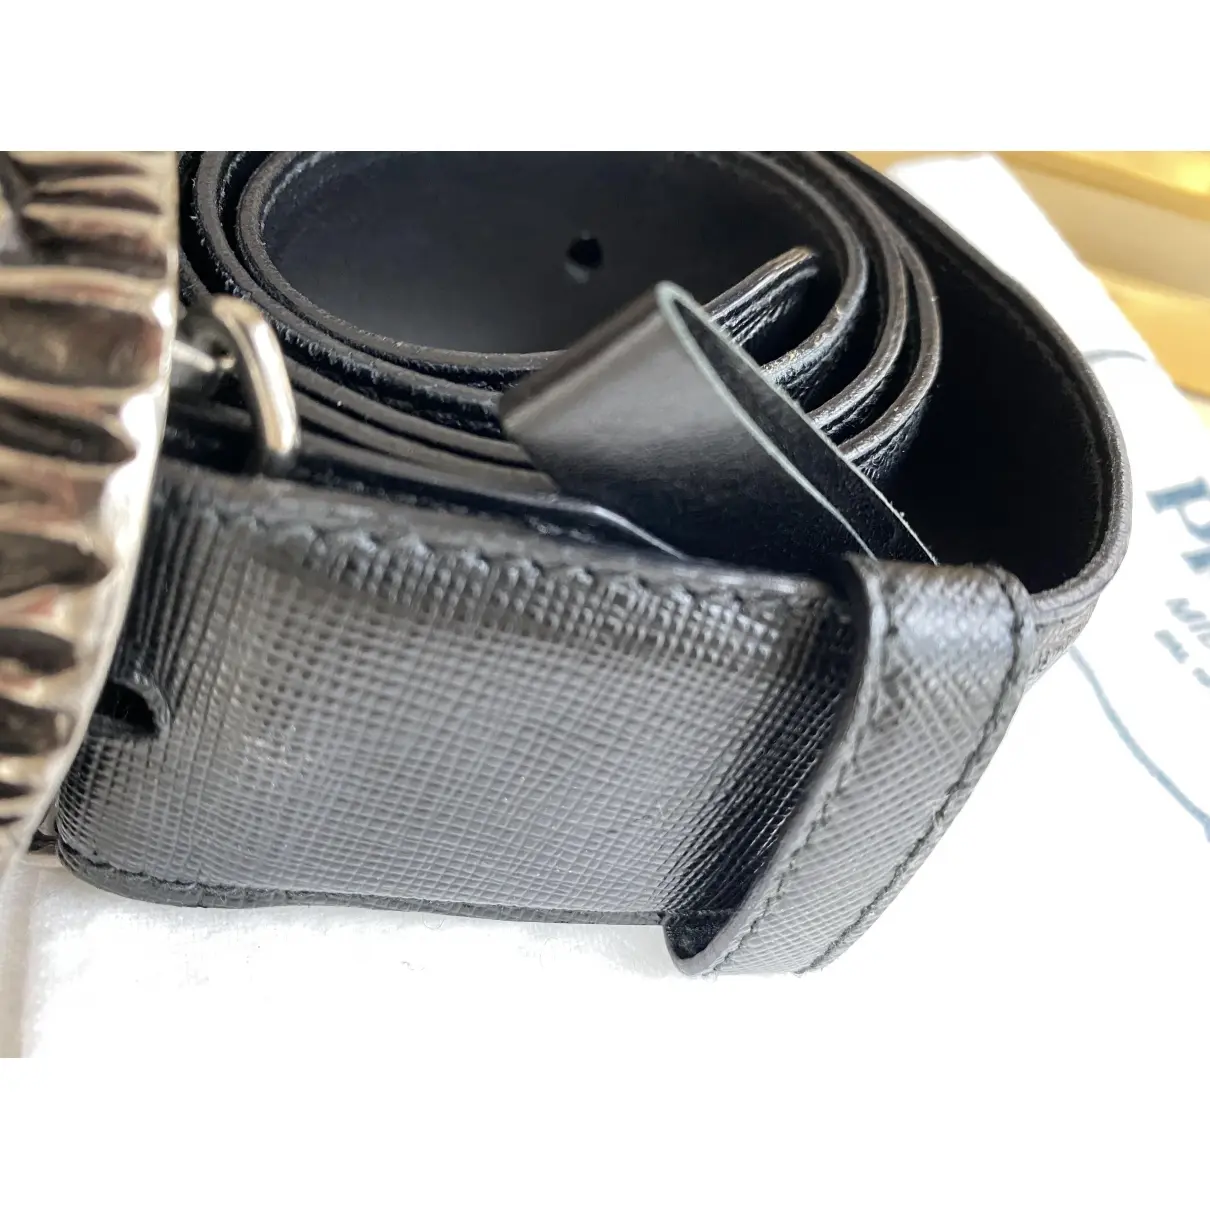 Buy Prada Leather belt online